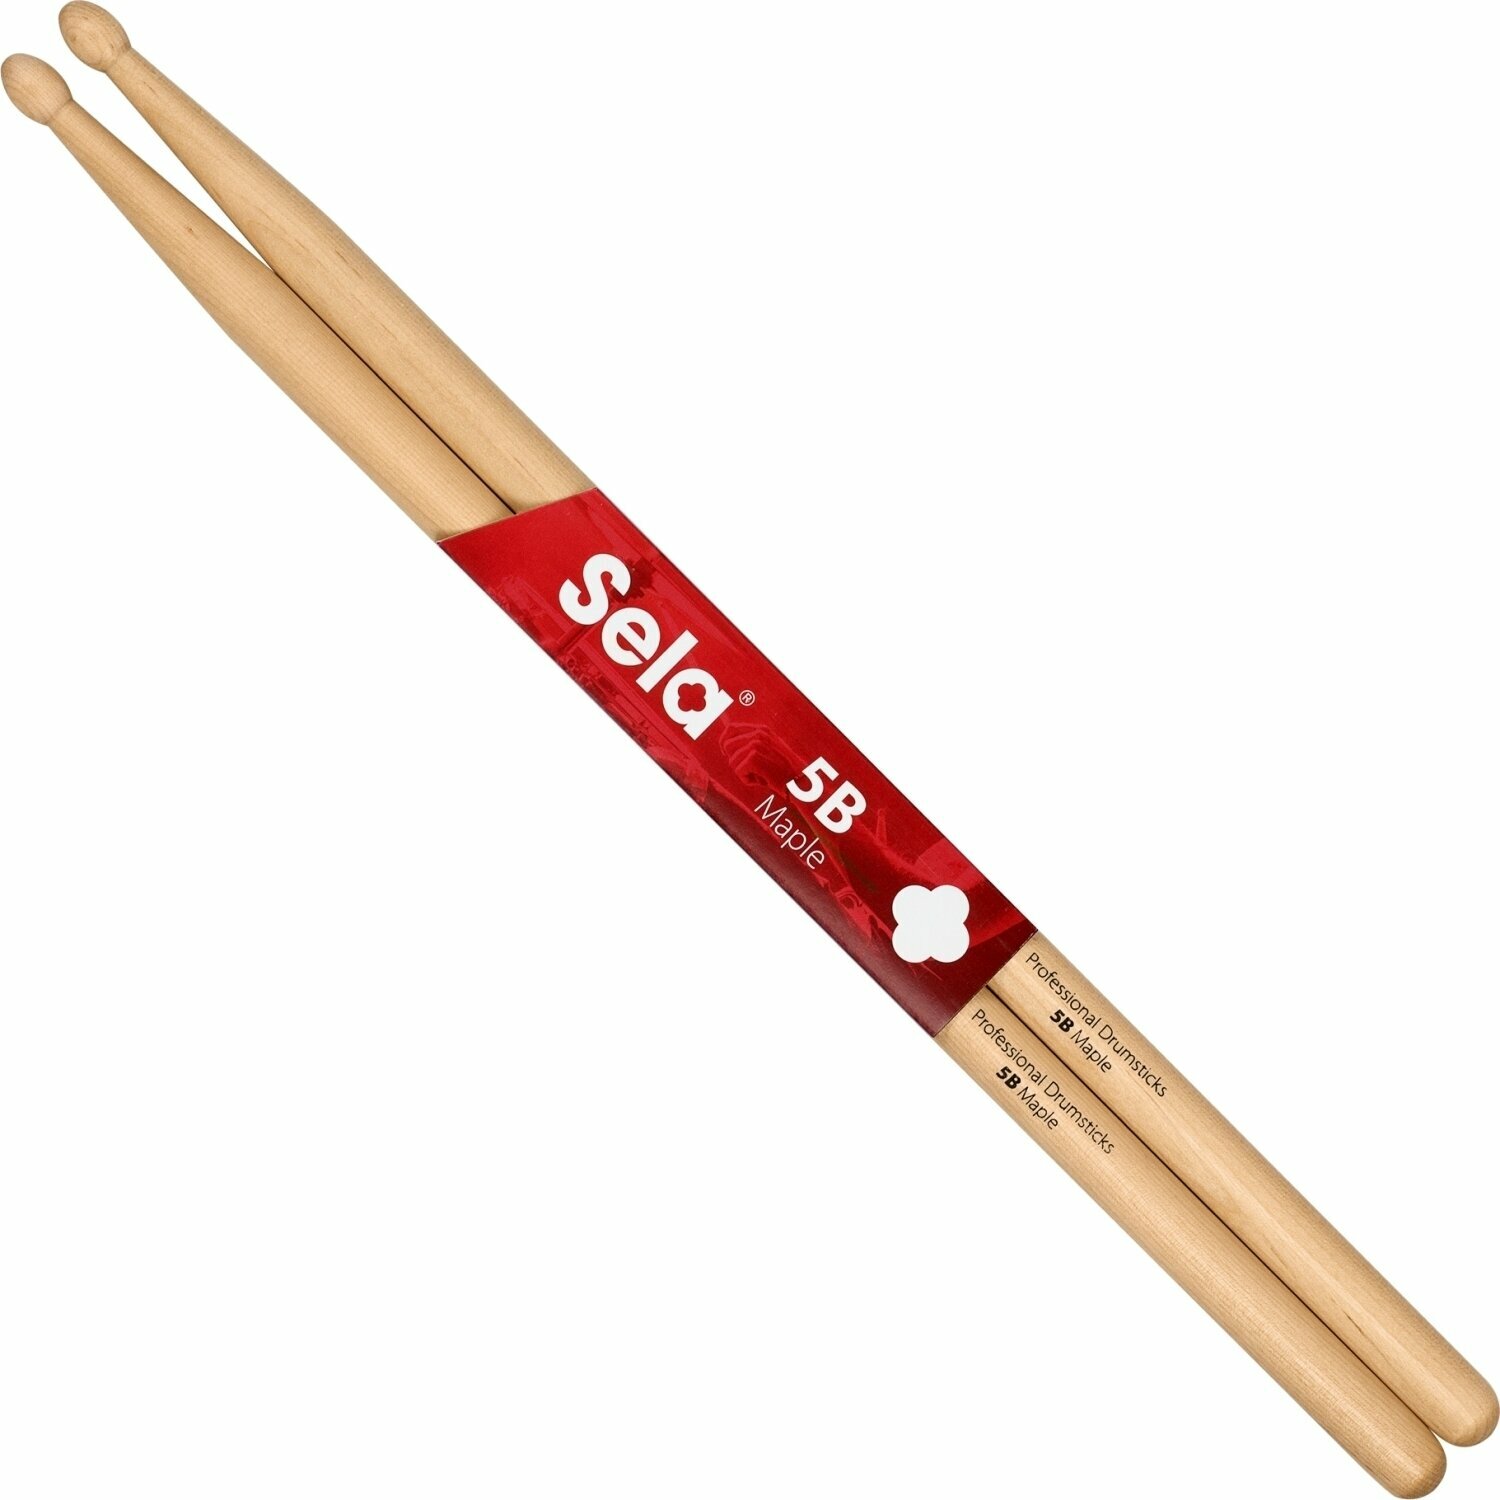 Baguettes Sela SE 273 Professional Drumsticks 5B - 6 Pair Baguettes